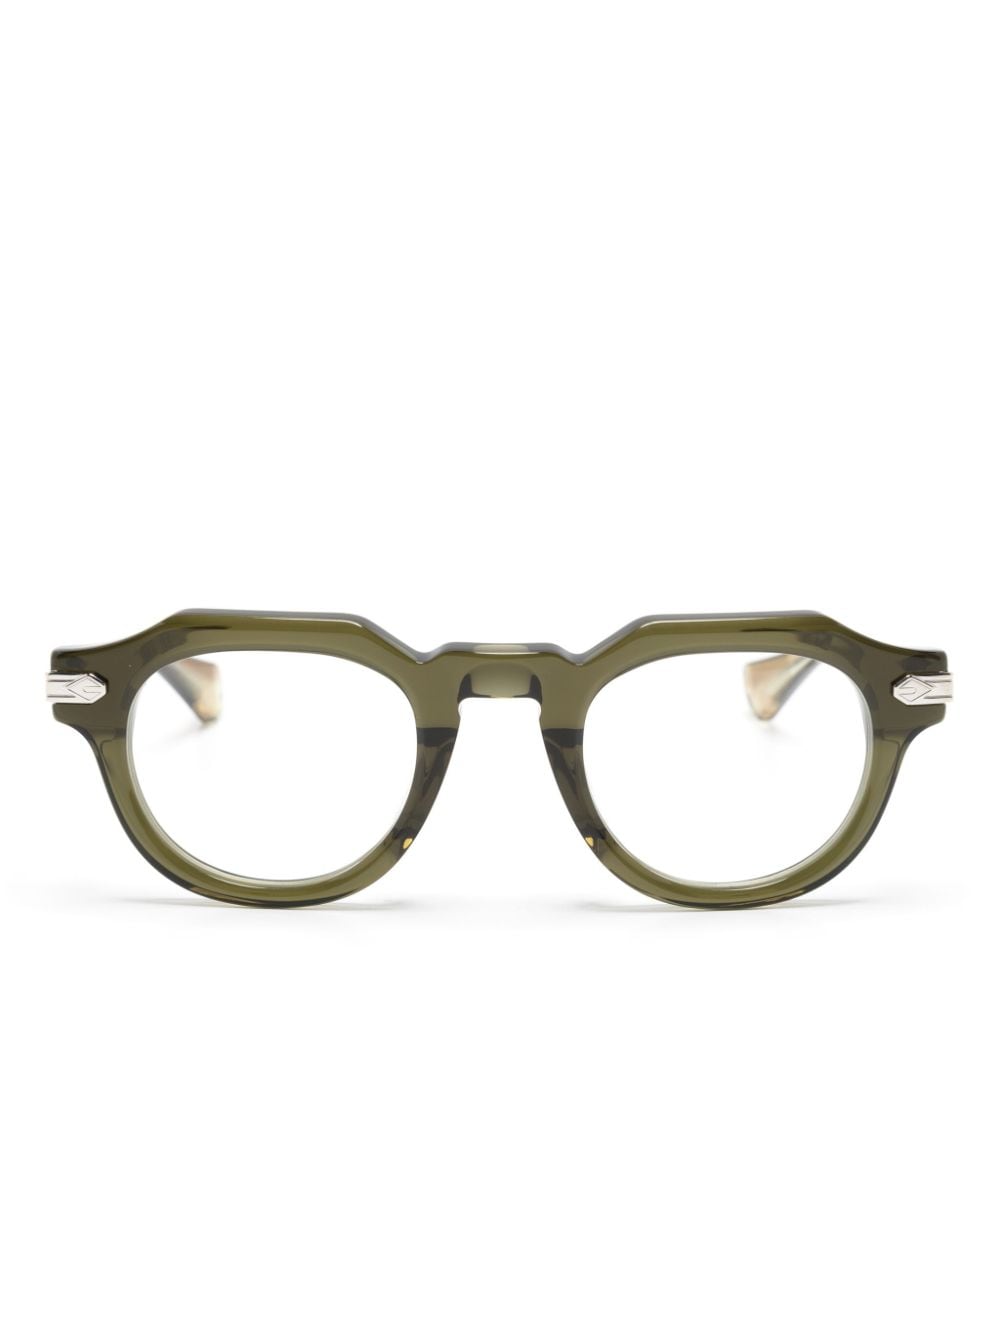 T Henri Eyewear M1 geometric-frame sunglasses - Green von T Henri Eyewear